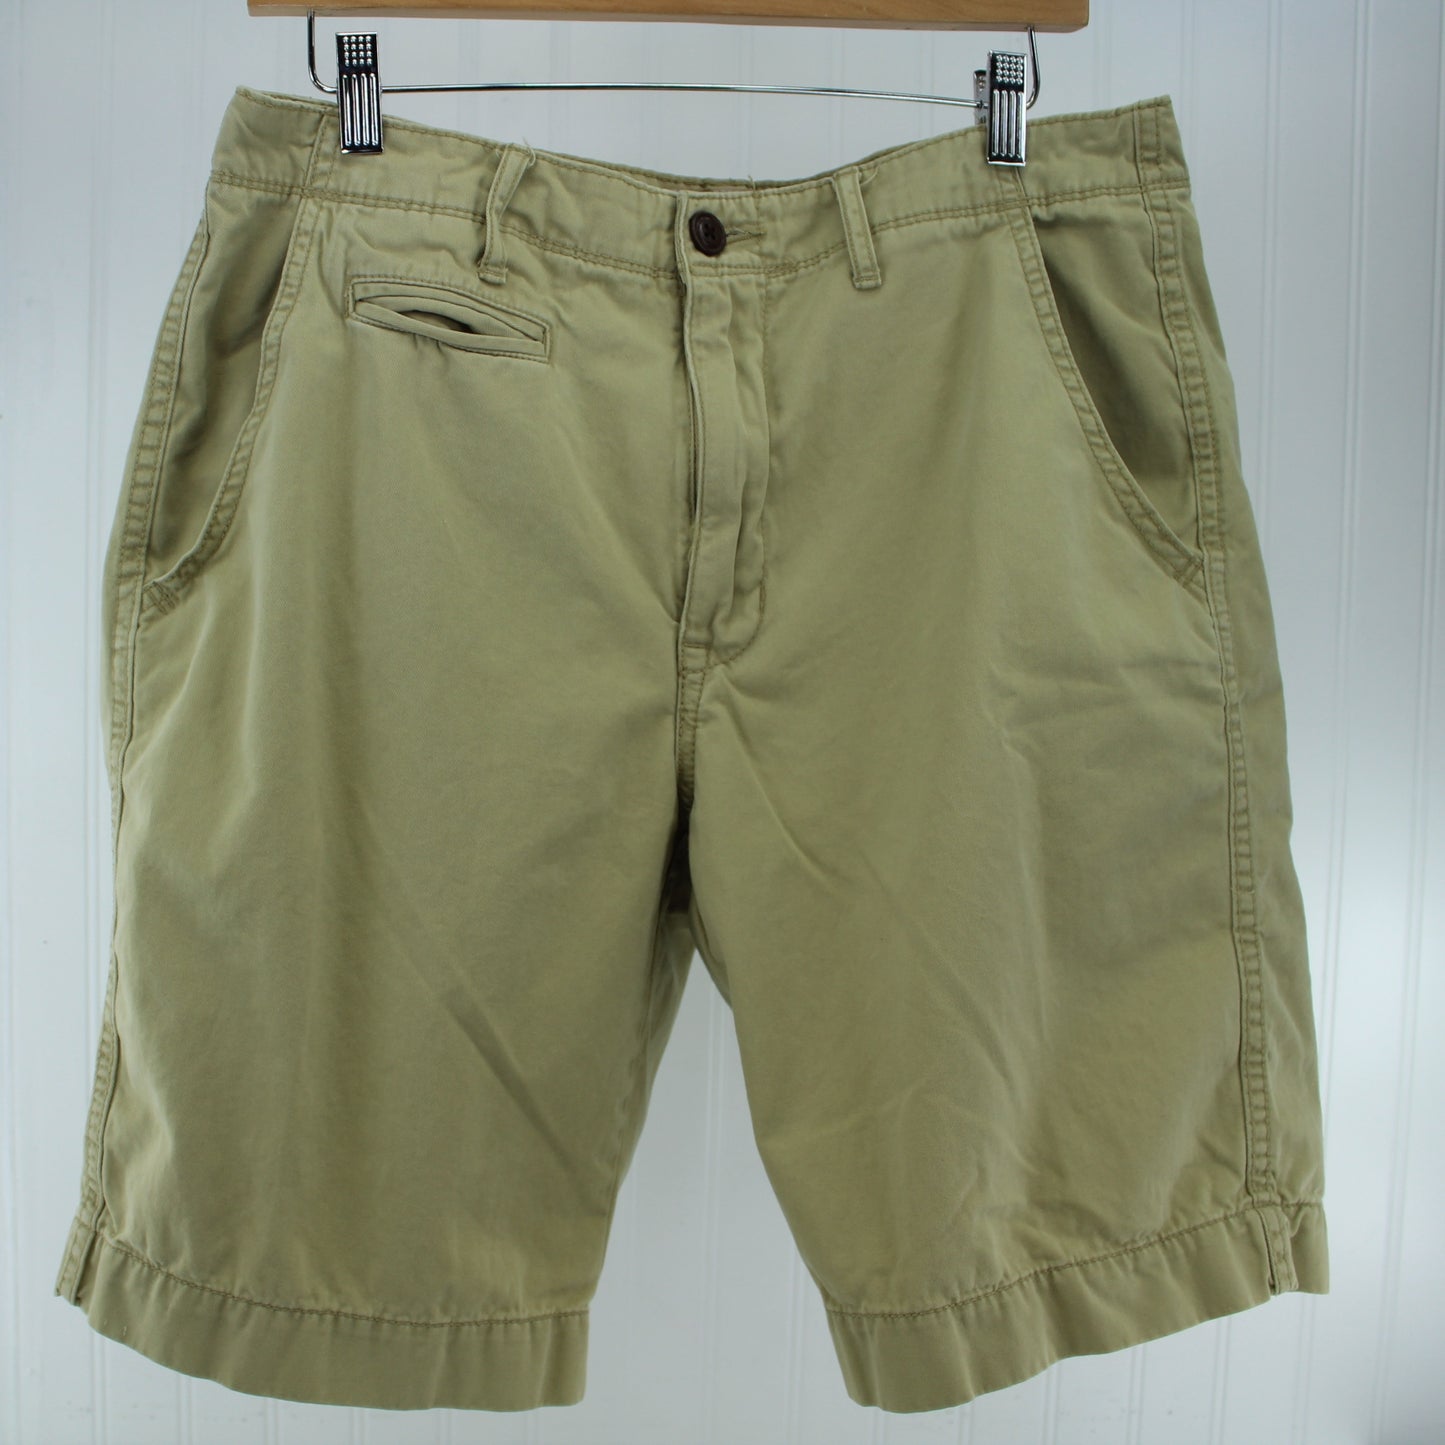 Arizona 100% Cotton Khaki Short Pants Watch Pocket Design Size 32 Inseam 9" used